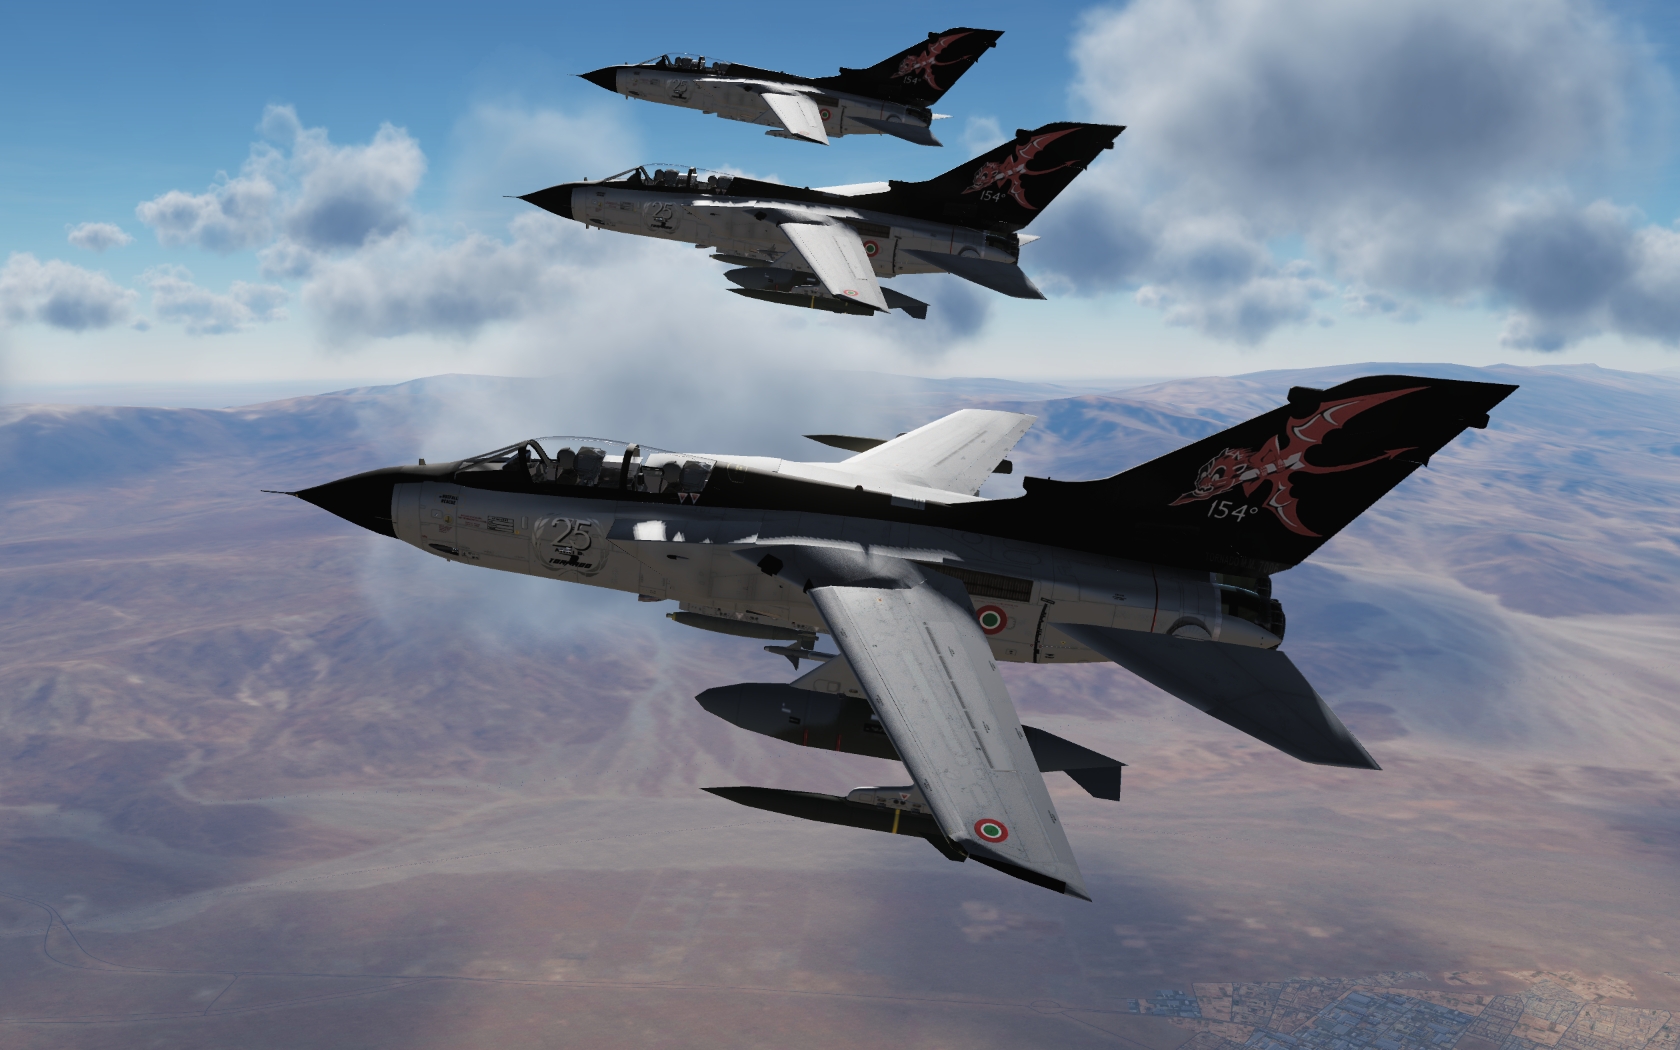 DCS WORLD 米格21比斯 + 米格29 + Tornado + A-10  混战游戏截图-8922 